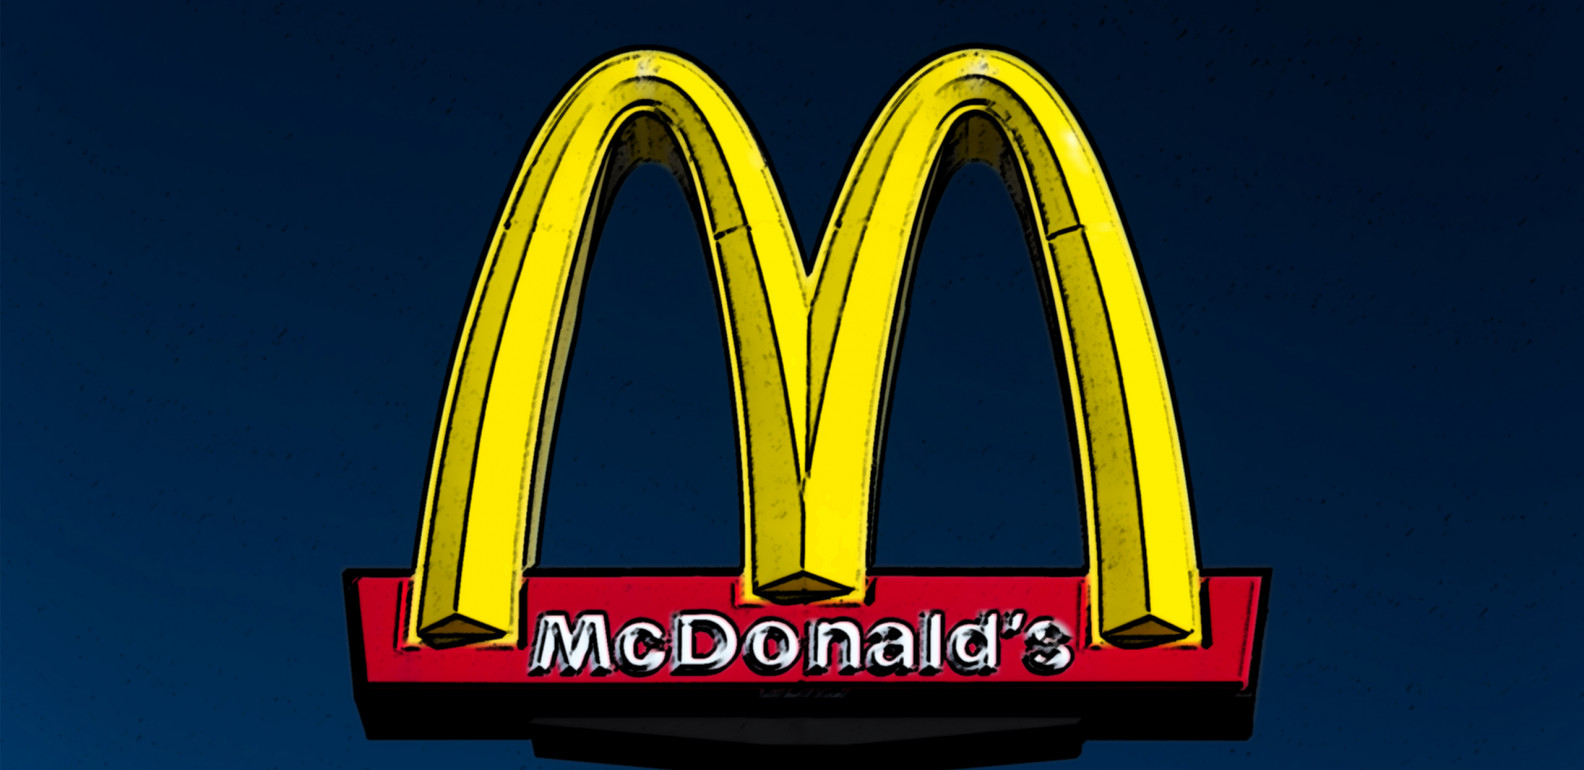 McDonald's hit by data breach